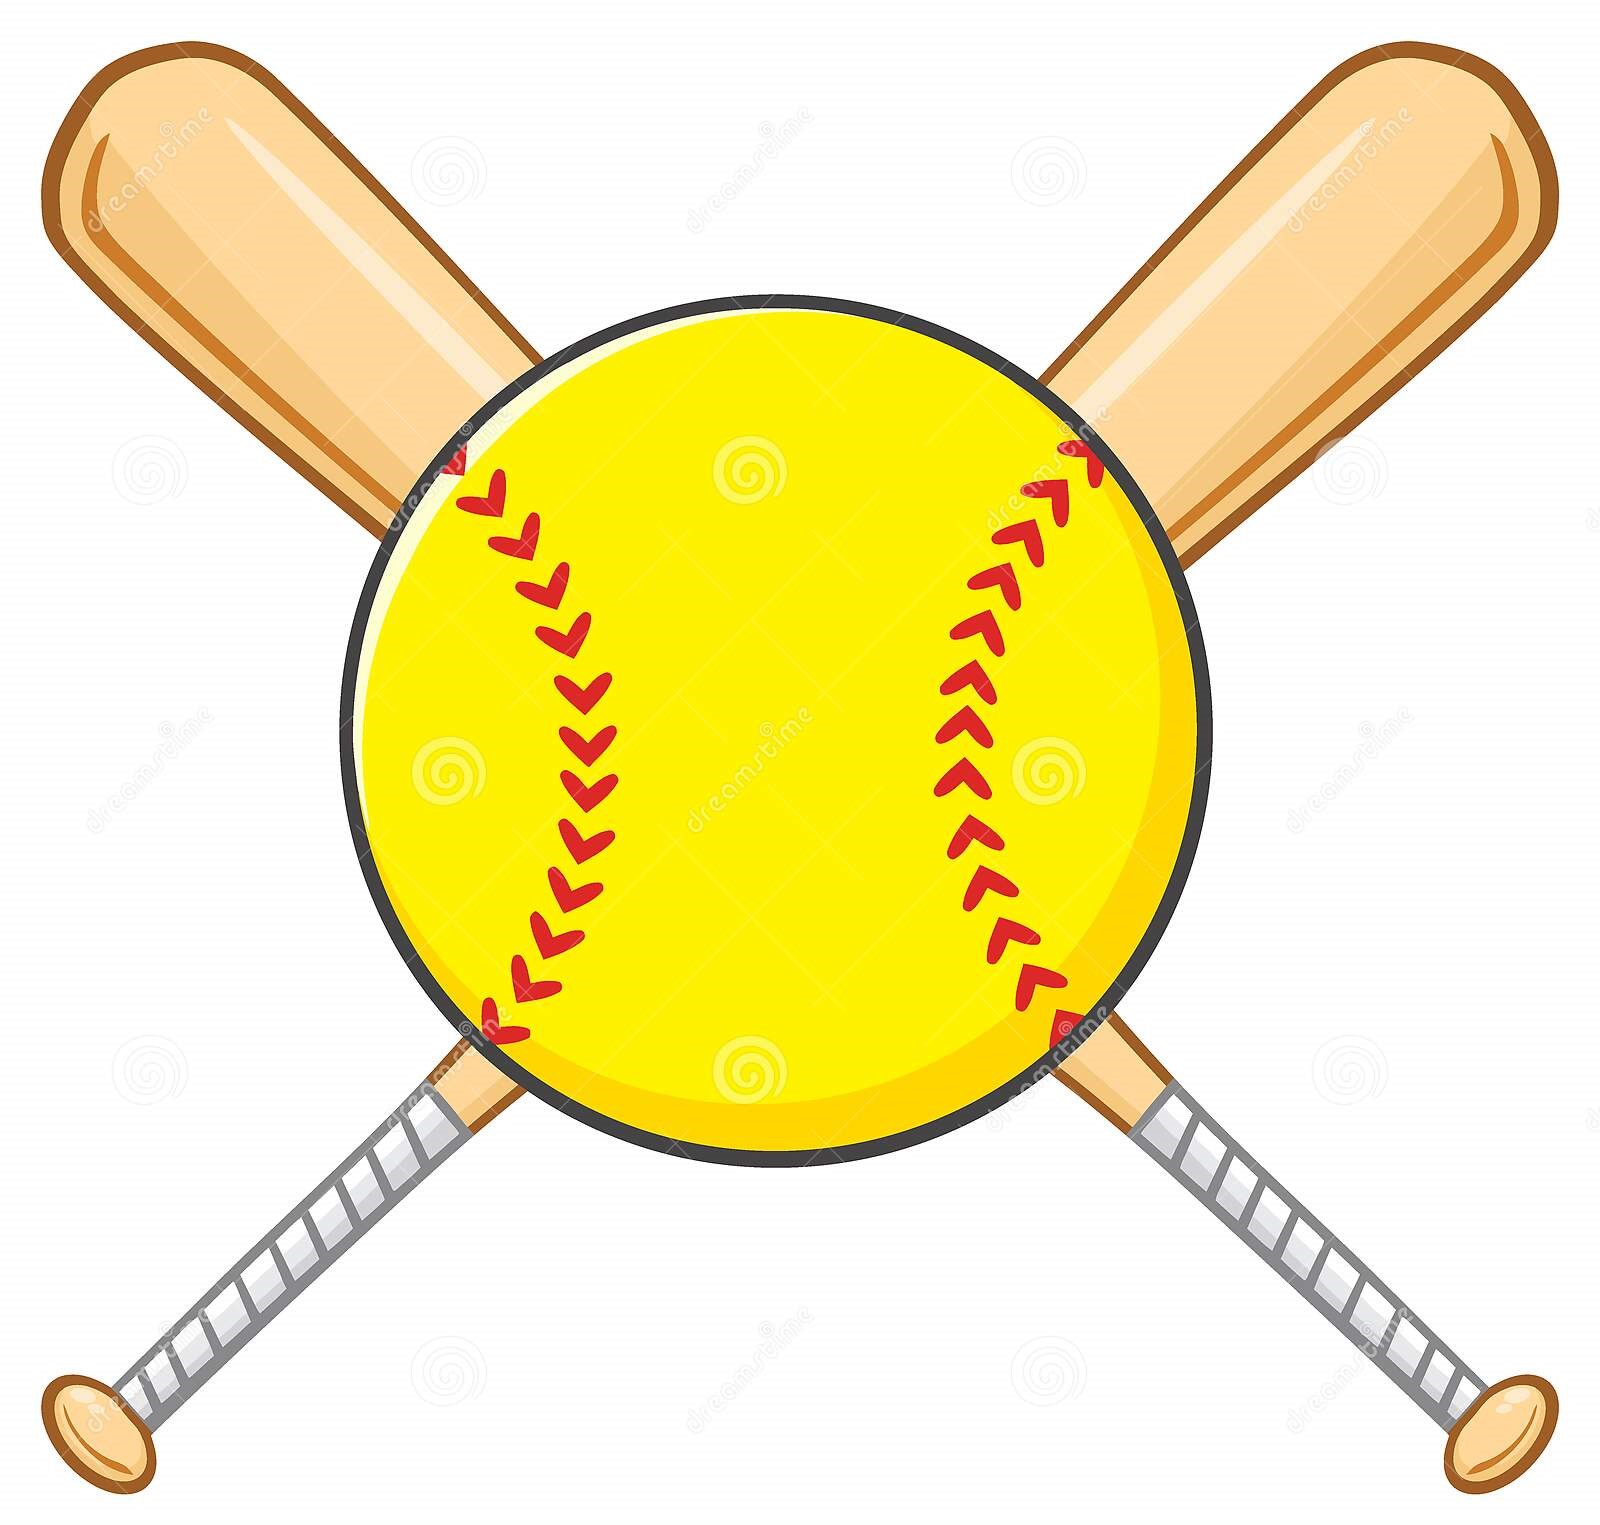 yellow-softball-over-crossed-bats-logo-design-yellow-softball-over-crossed-bats-logo-design-vector-illustration-isolated-white-194026758